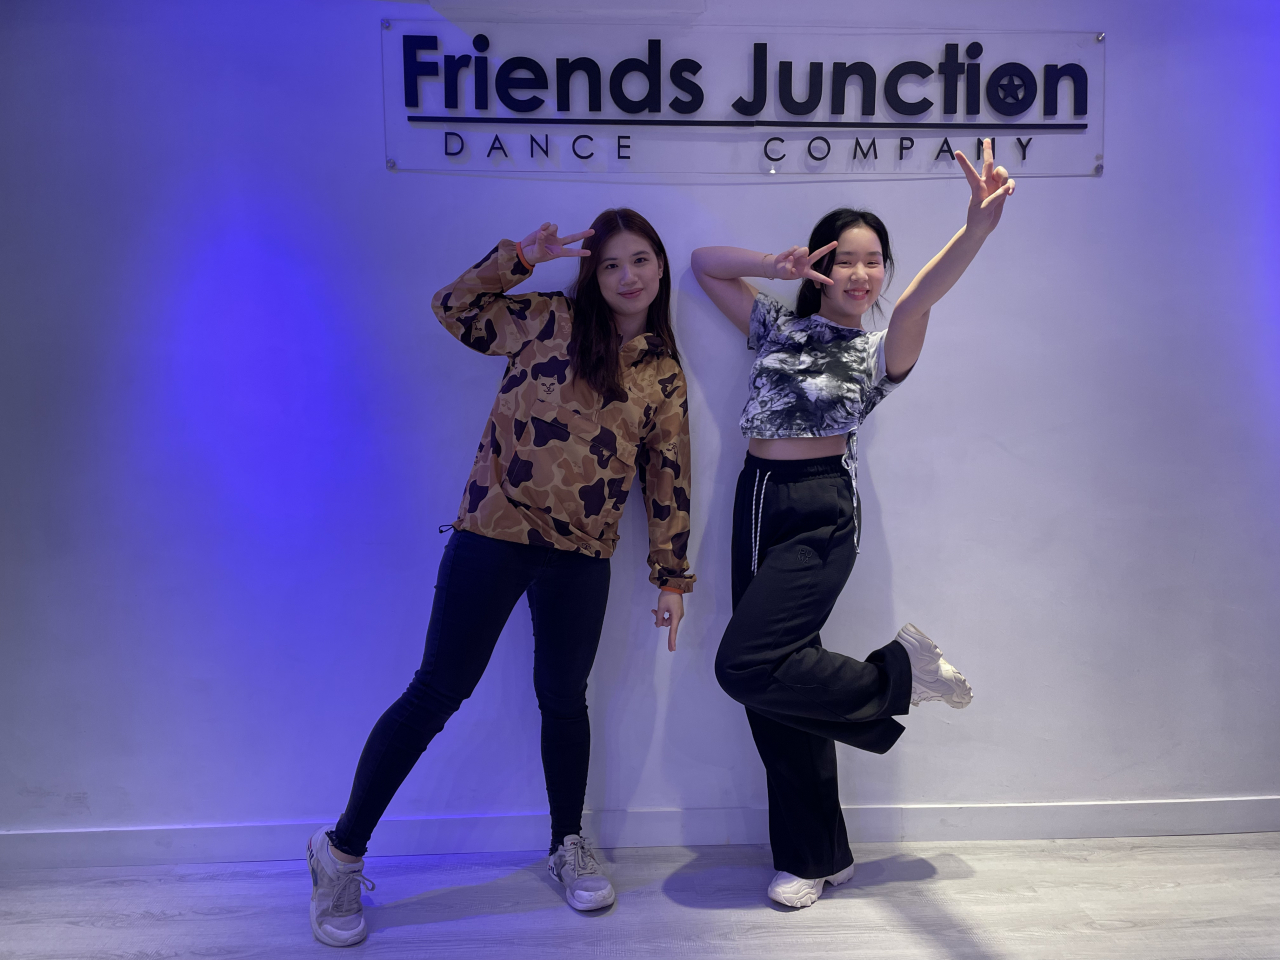 Vivo Fung Lok-yin (left) and Megan Leow Su Lynn pose for photos at a Friends Junction Dance Company studio in Hong Kong on March 21. (Naomi Ng/The Korea Herald)